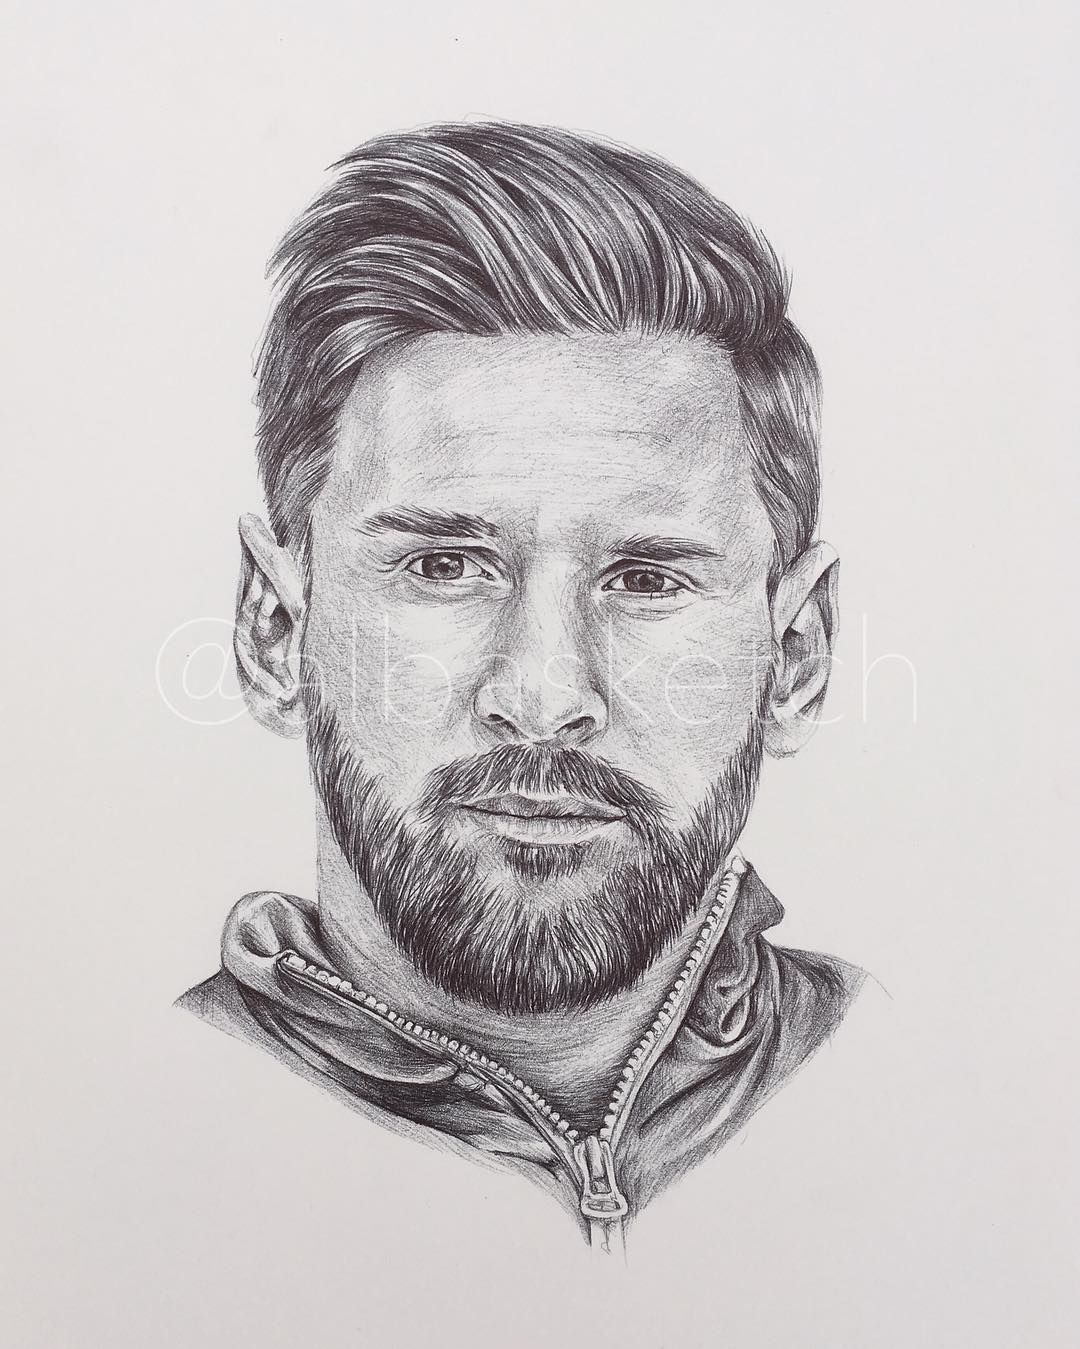 ArtStation - Portrait Drawing of Lionel Messi